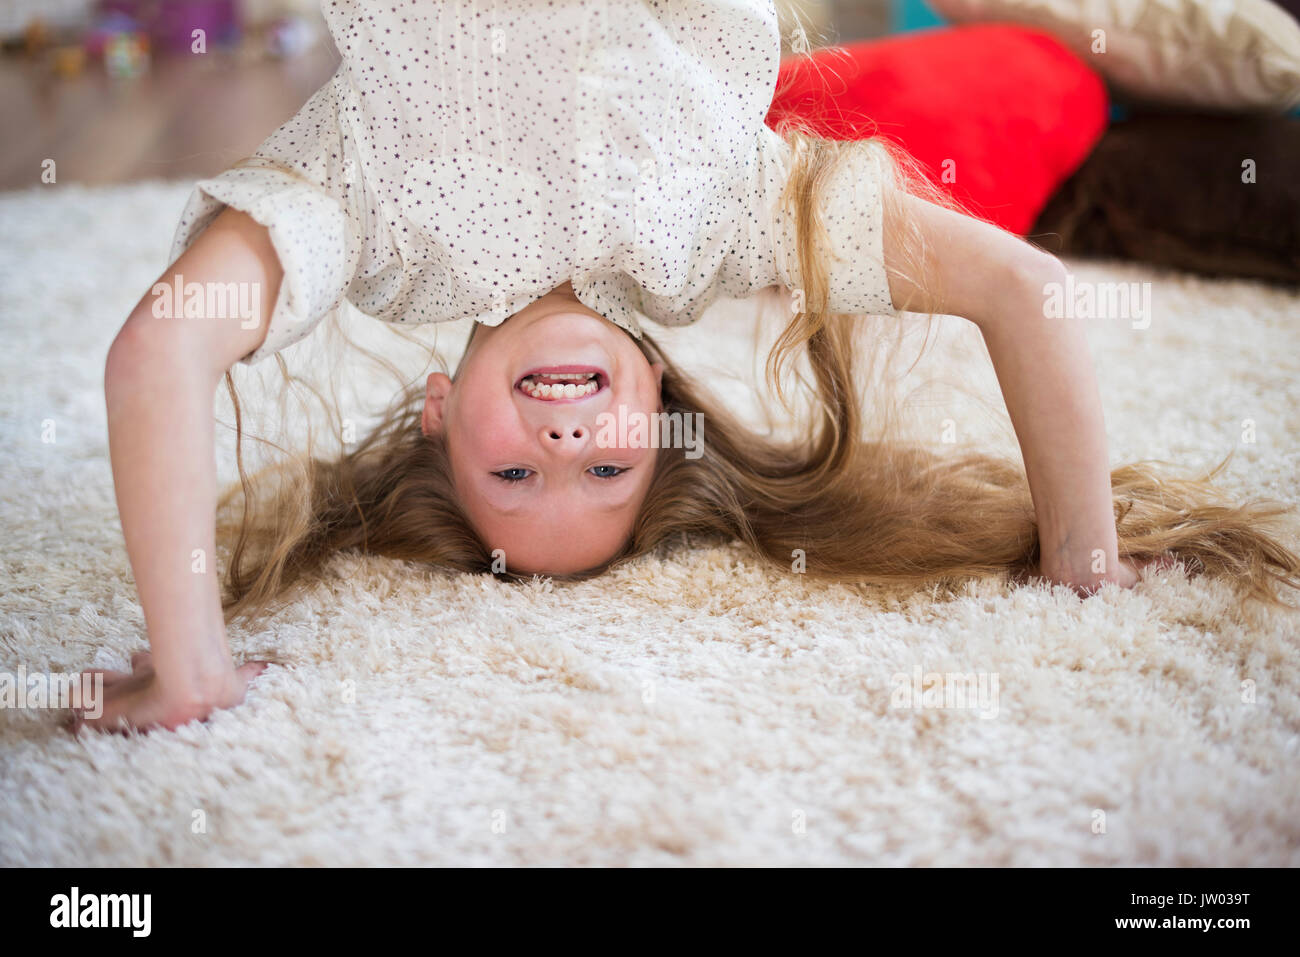 Joyful girl showing a headstand pose Stock Photo